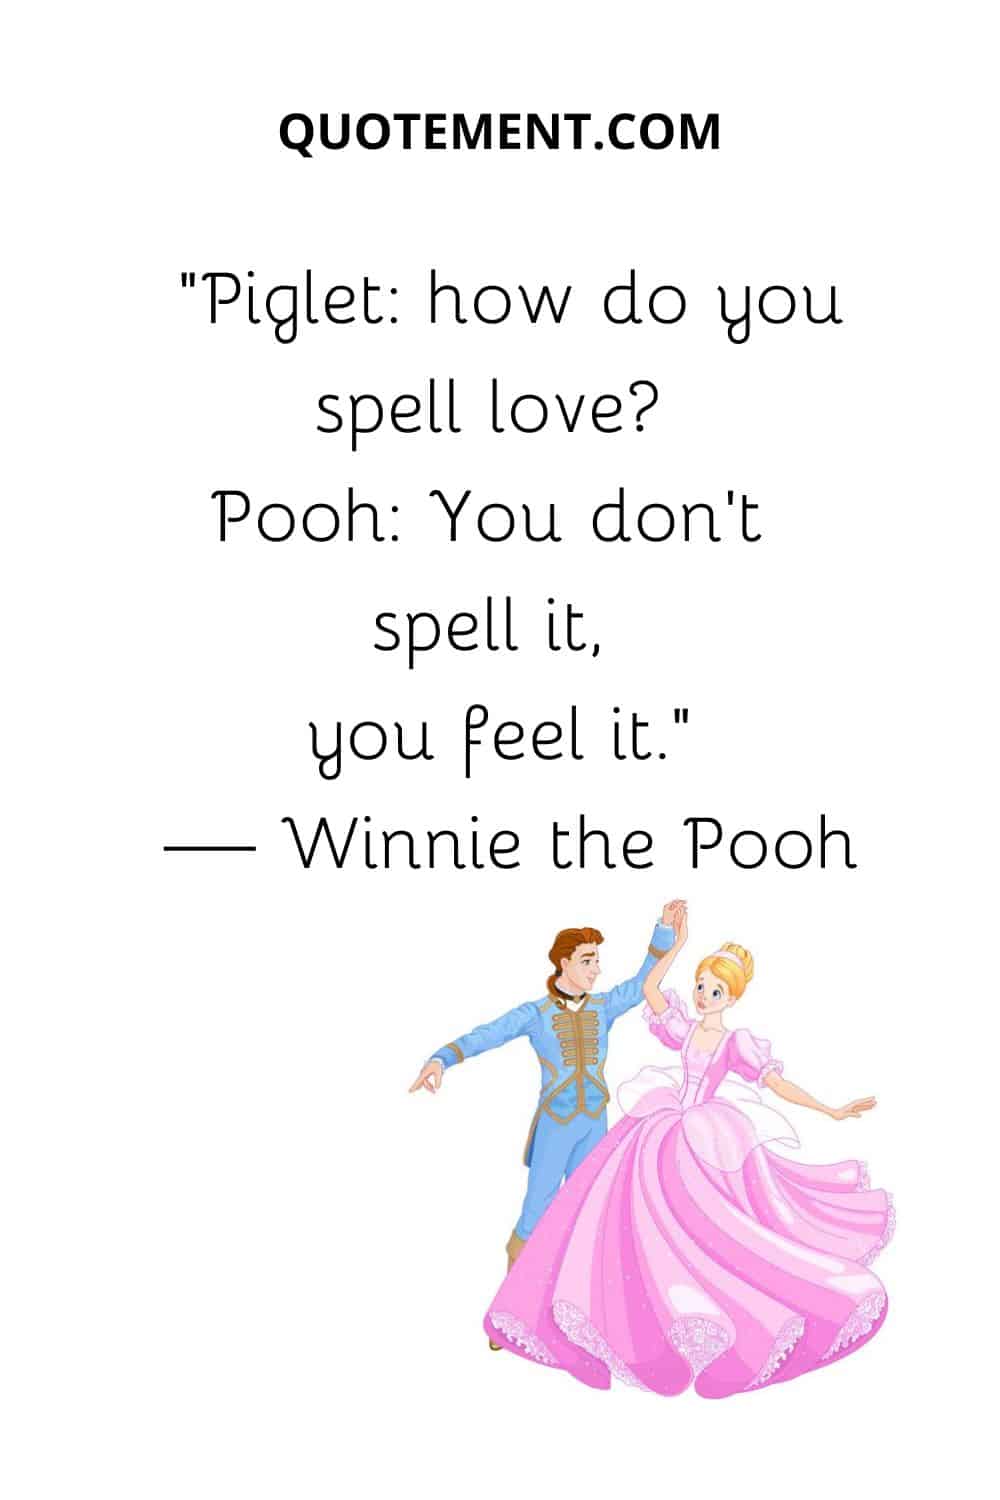 Piglet - how do you spell love?